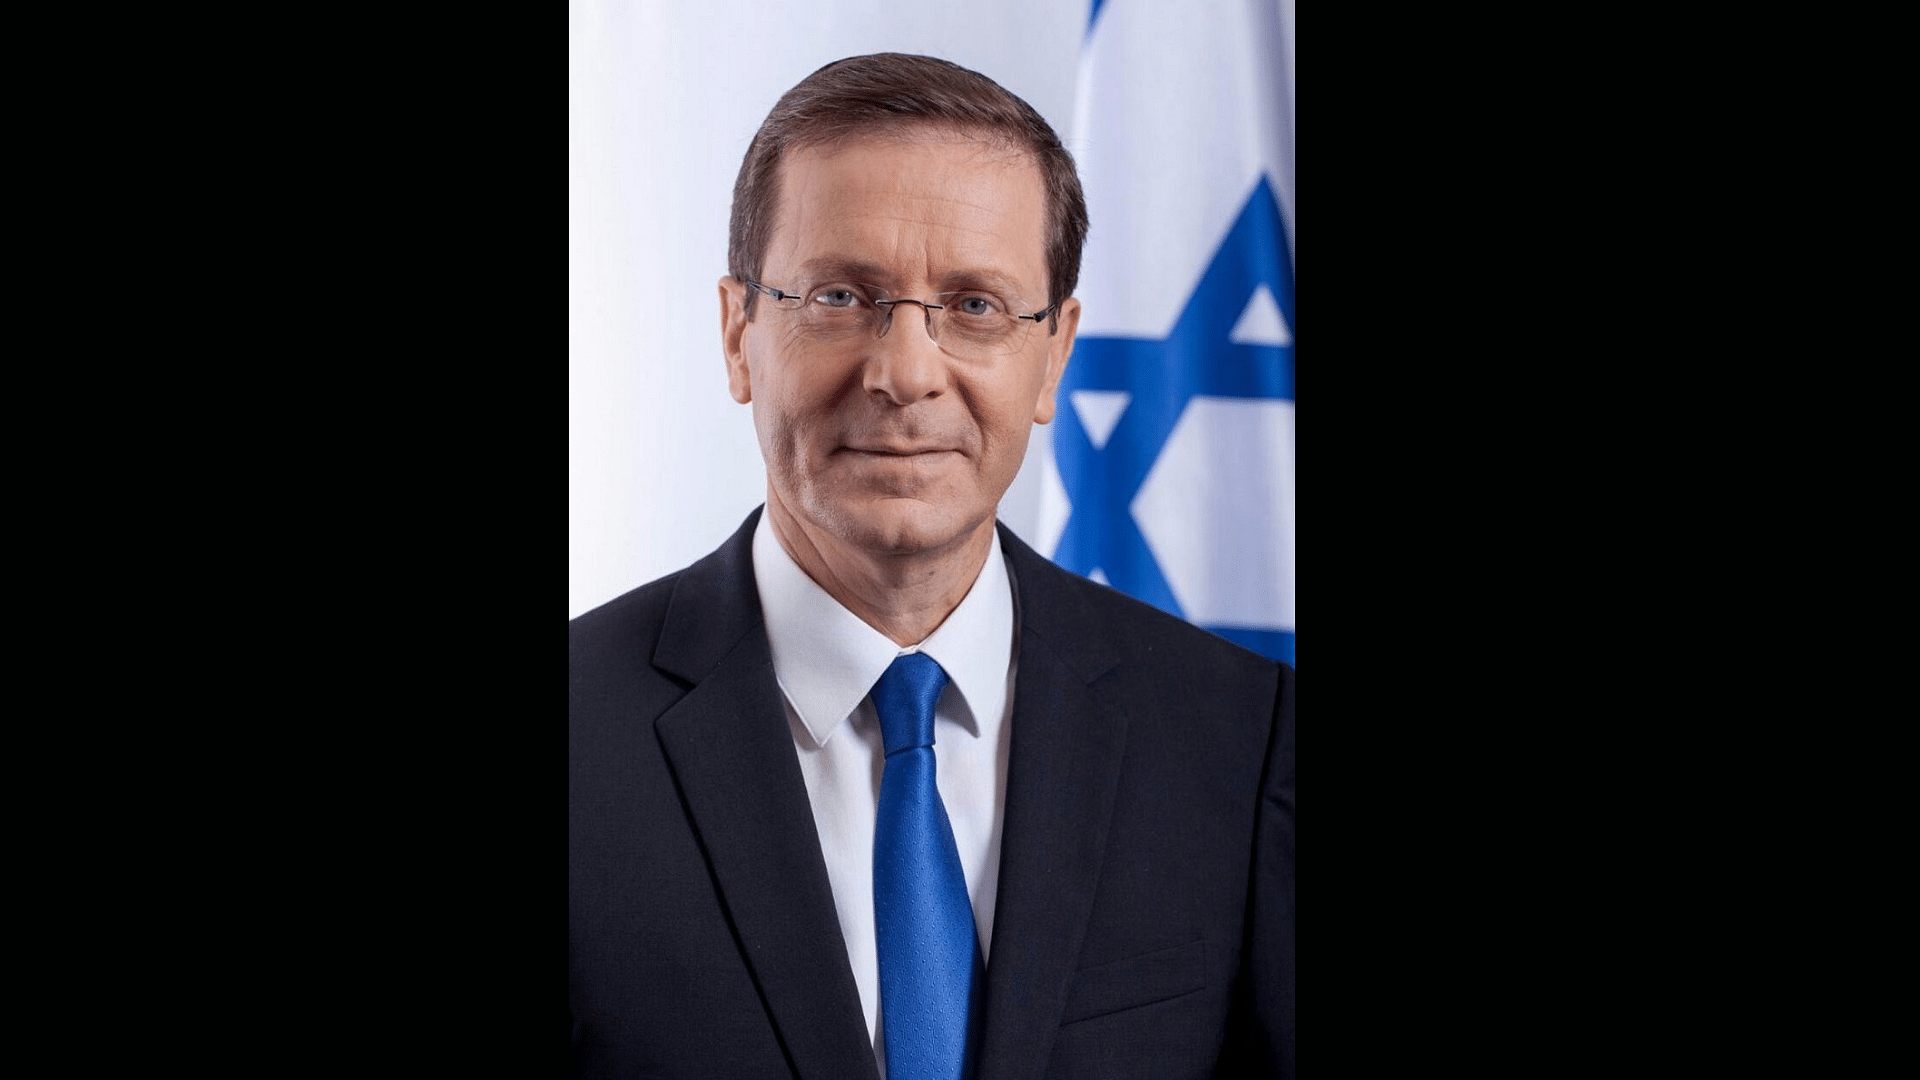 Veteran Israeli politician Isaac Herzog has been elected Israel’s 11th president.